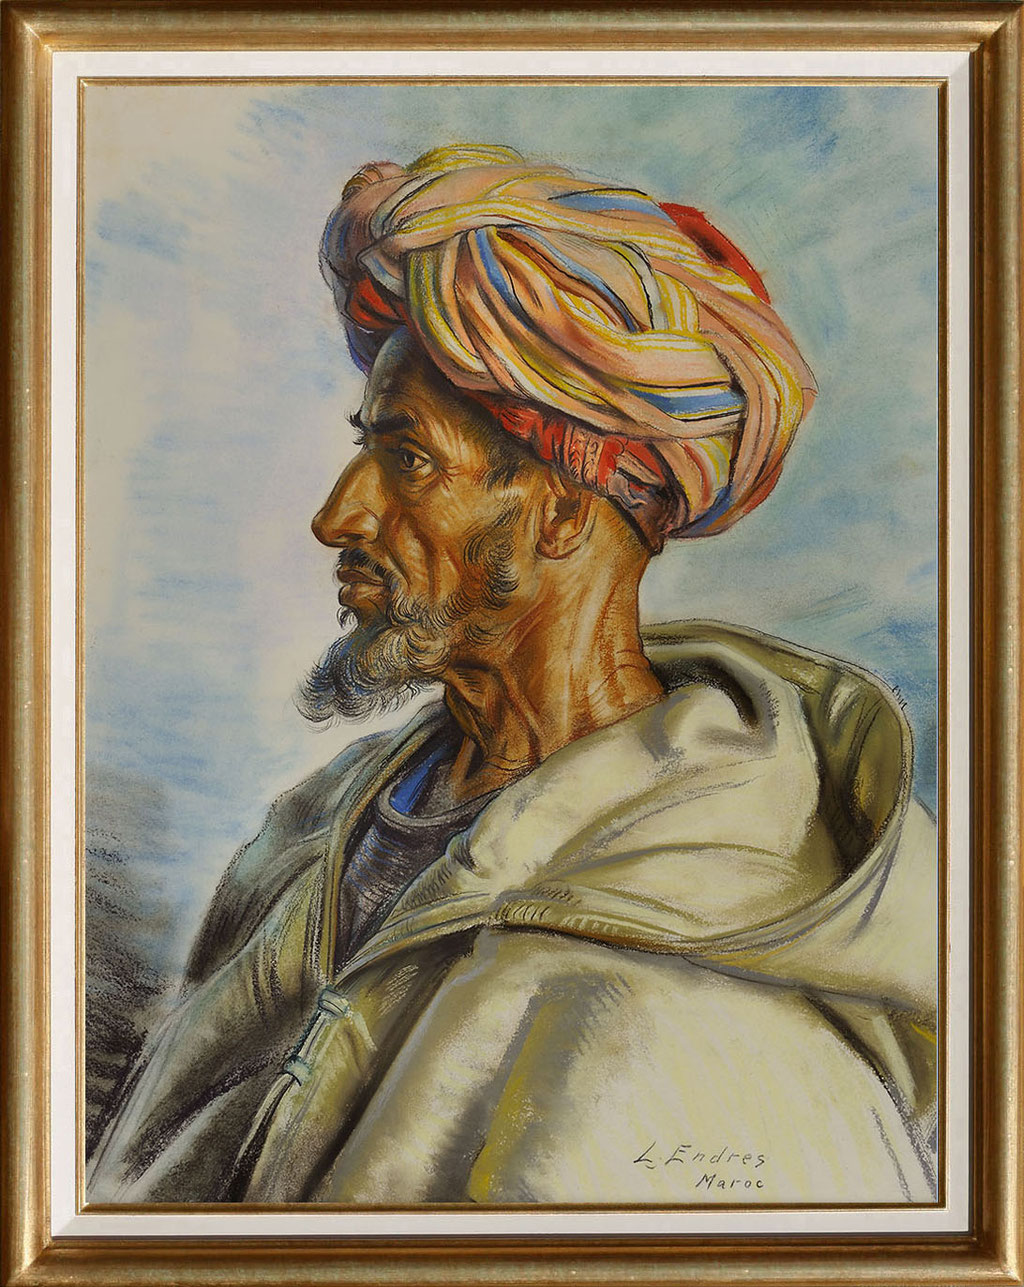 Endres, le marocain au turban